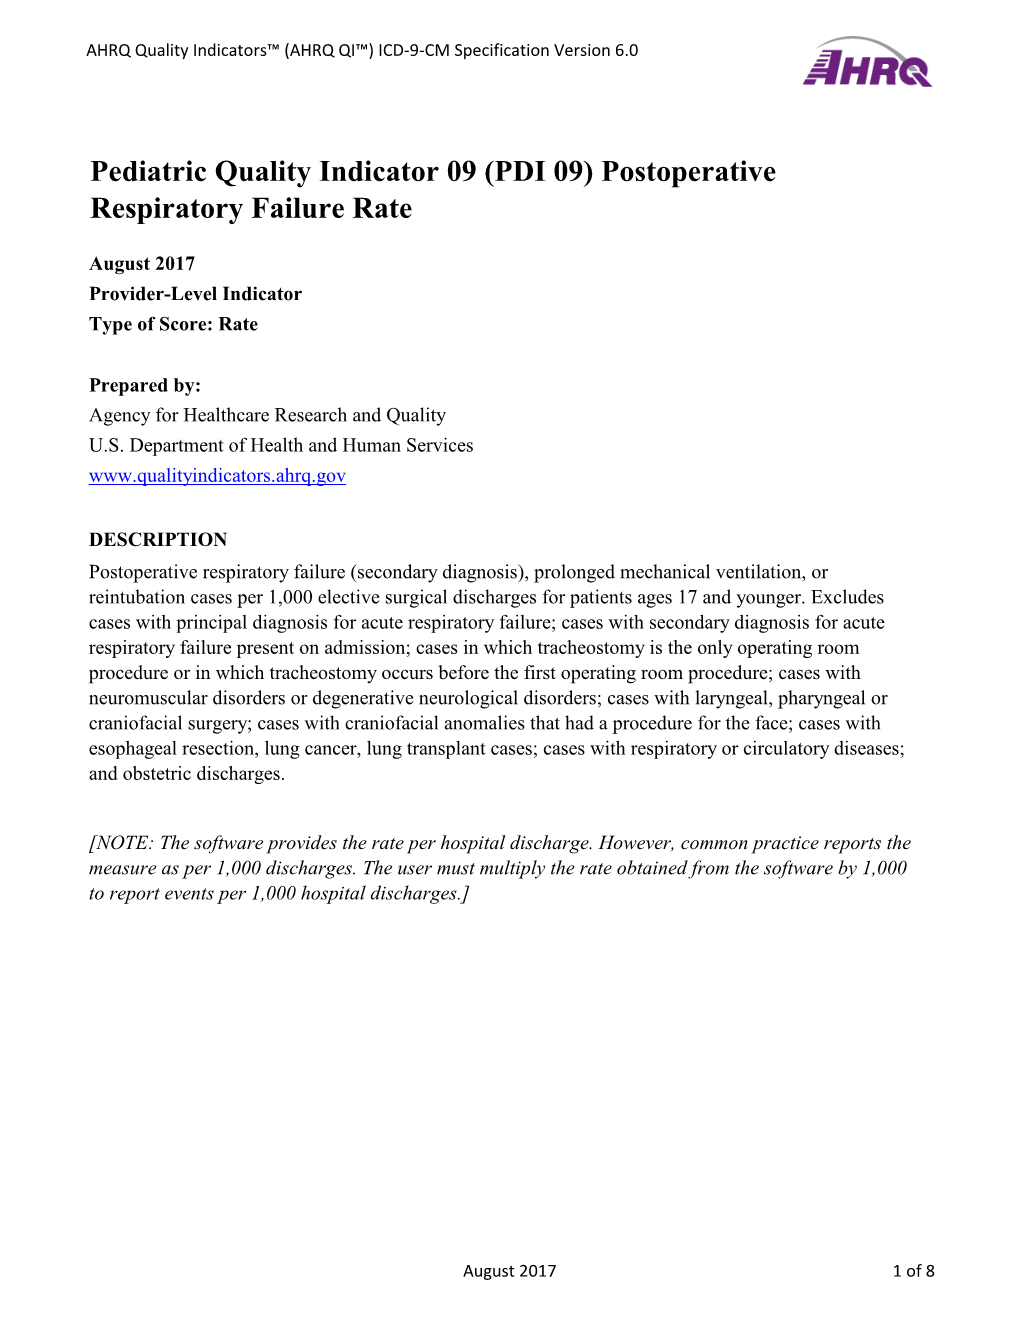 (PDI 09) Postoperative Respiratory Failure Rate